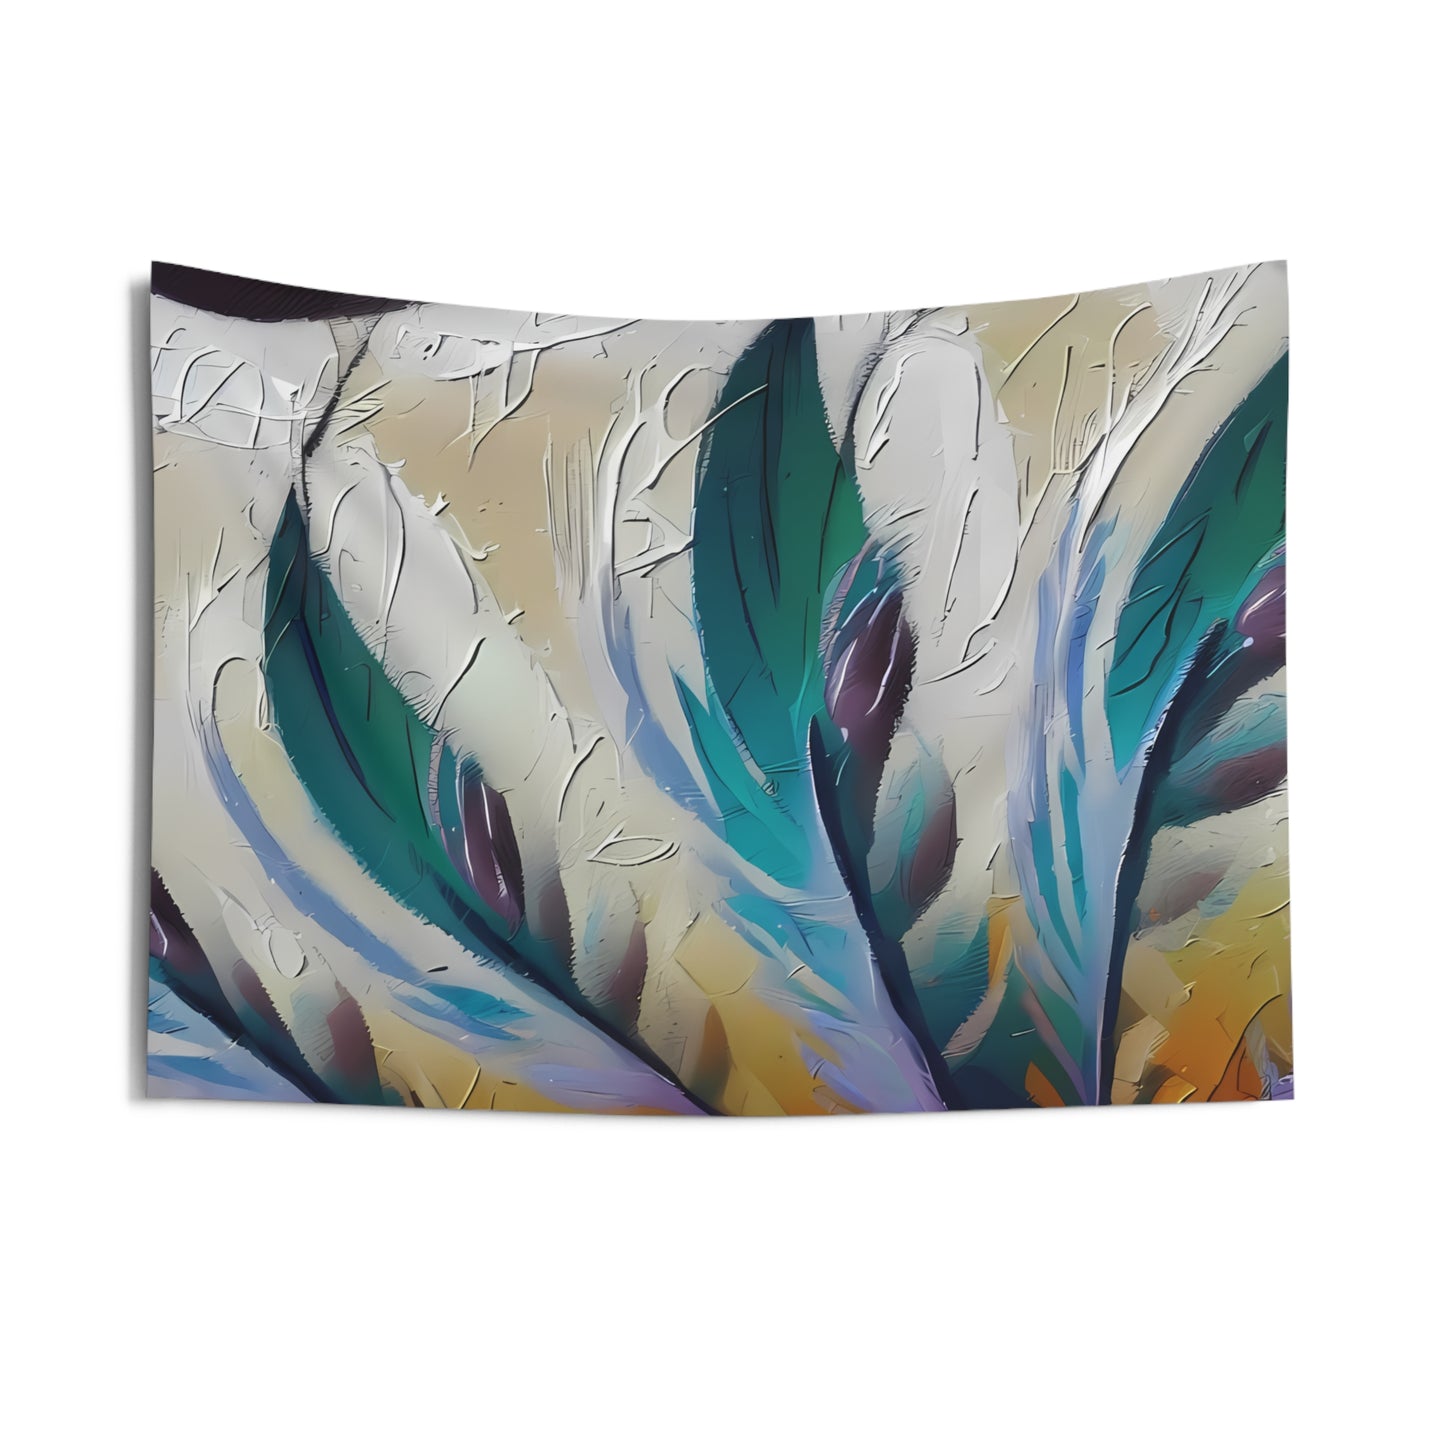 Creative Indoor Dreamcatcher Wall Art Tapestries - Dreamcatcher - Wall Decoration Gift Items